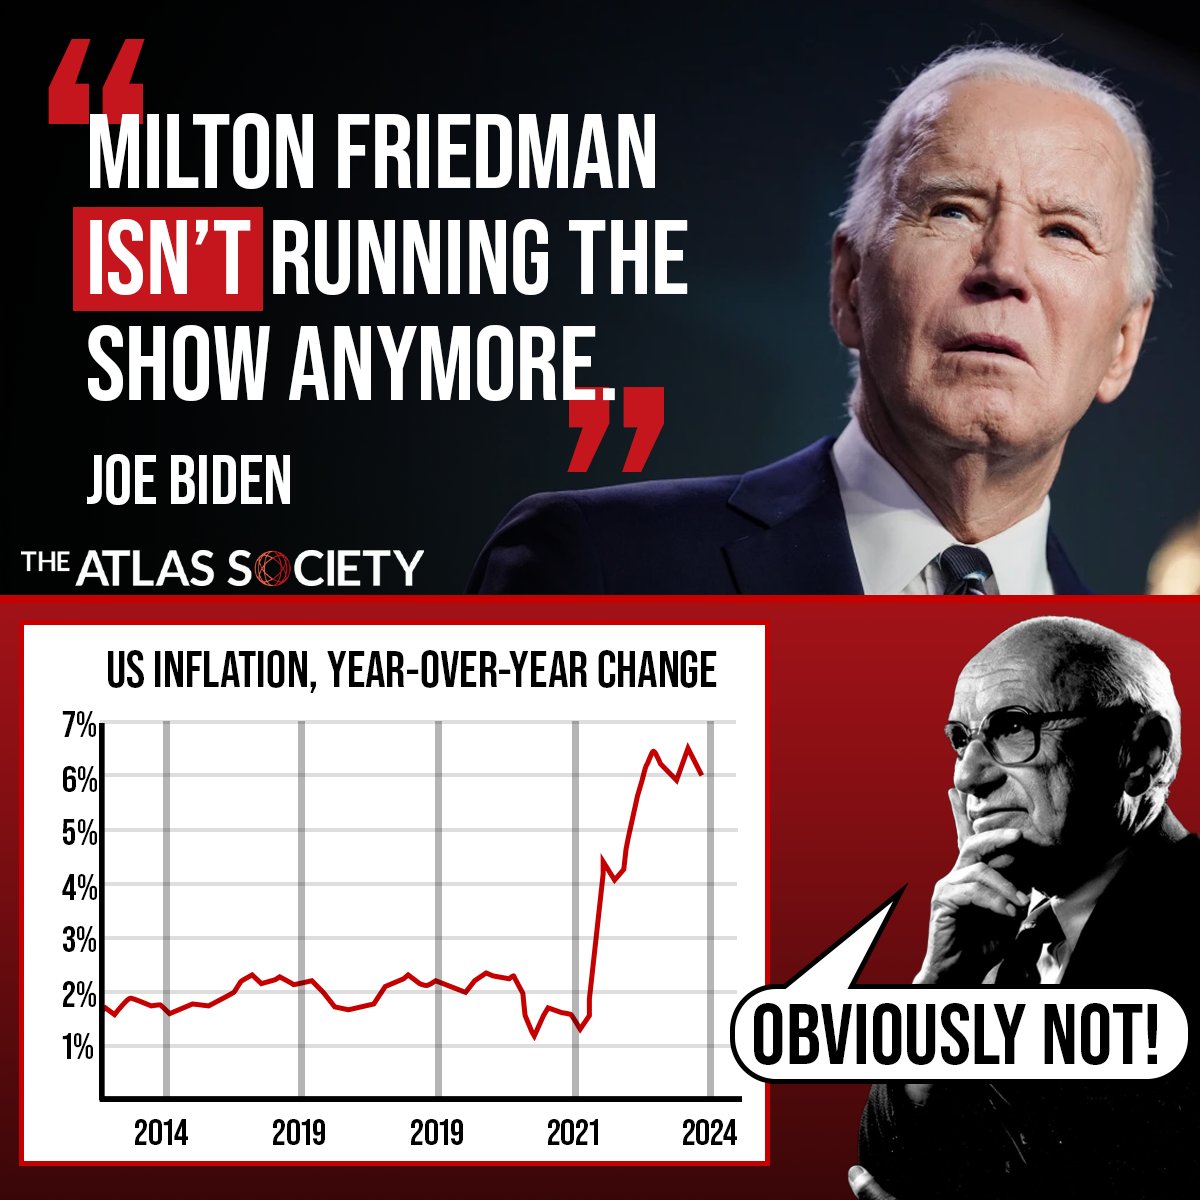 Bring back capitalism! #Biden #Economy #Inflation #Capitalism #MiltonFriedman #AynRand